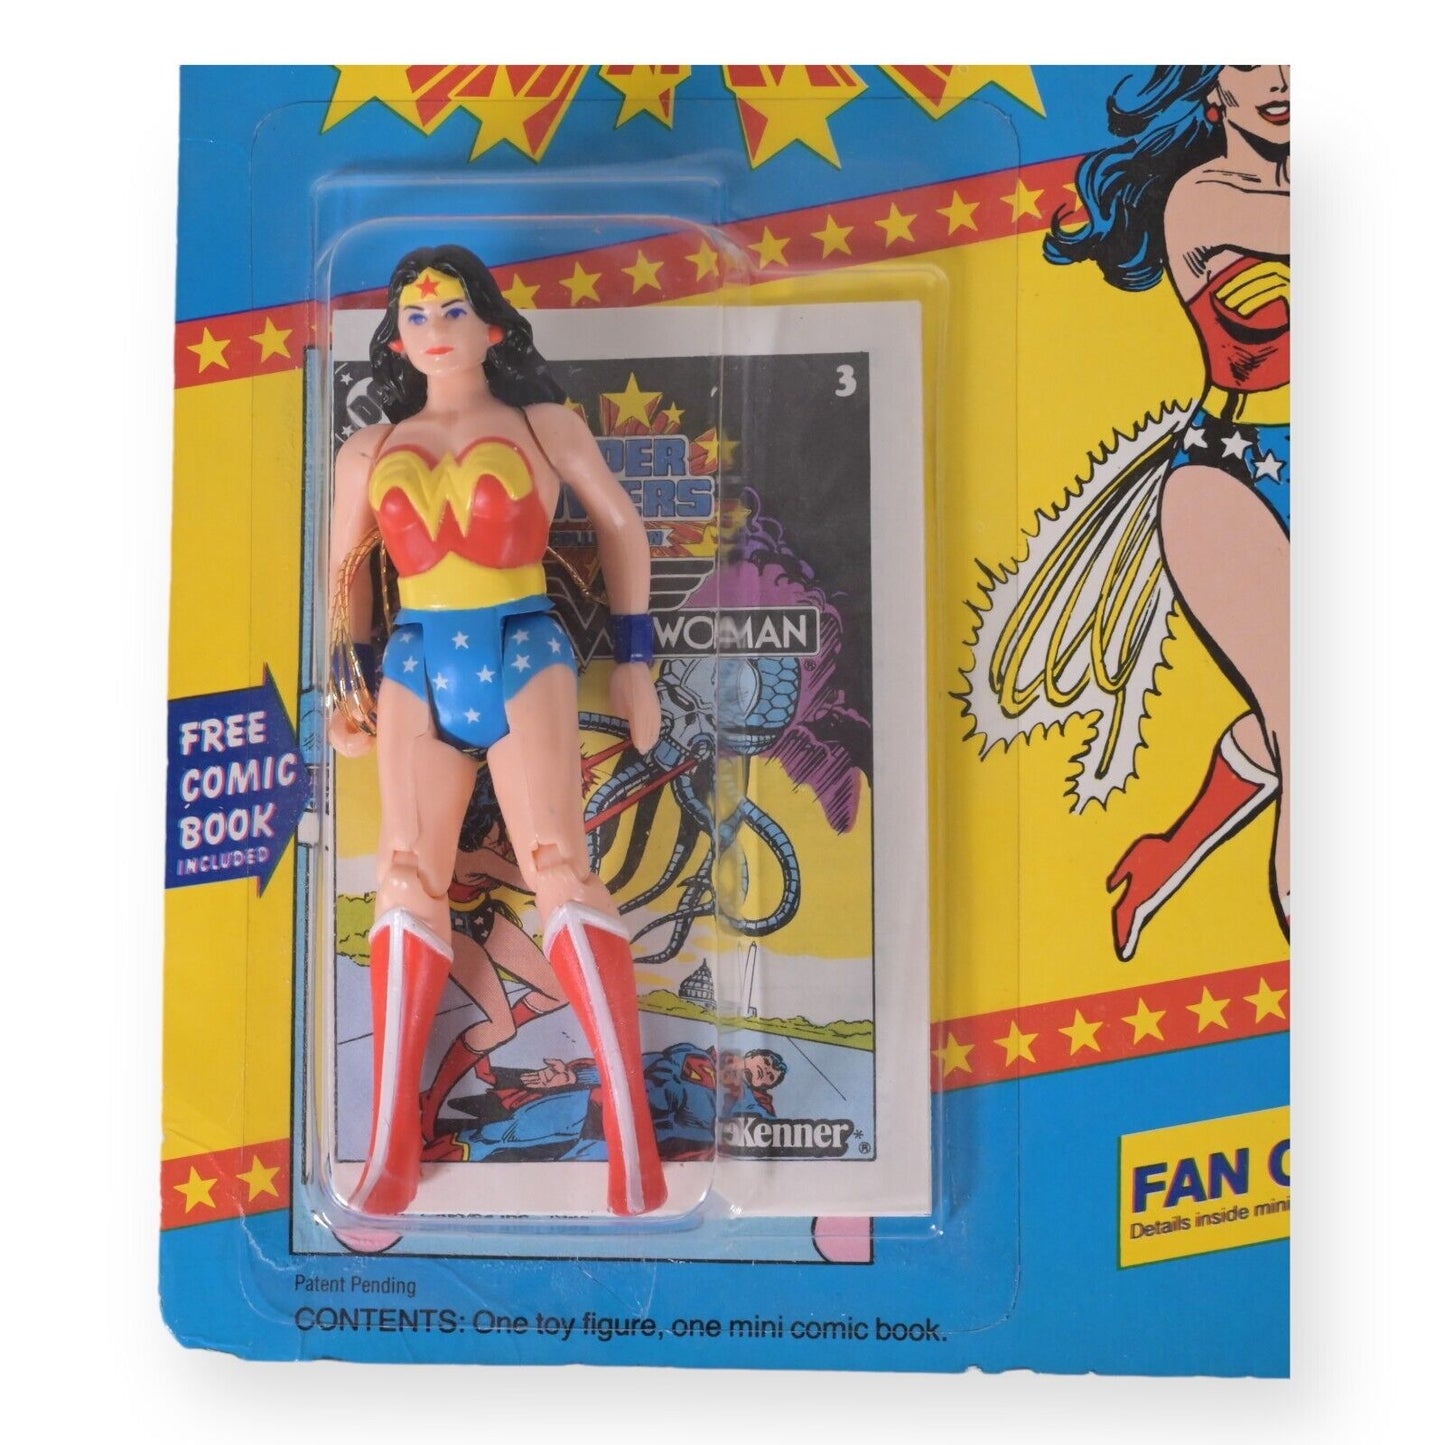 Kenner 1985 Super Powers Wonder Woman Figure - 1984